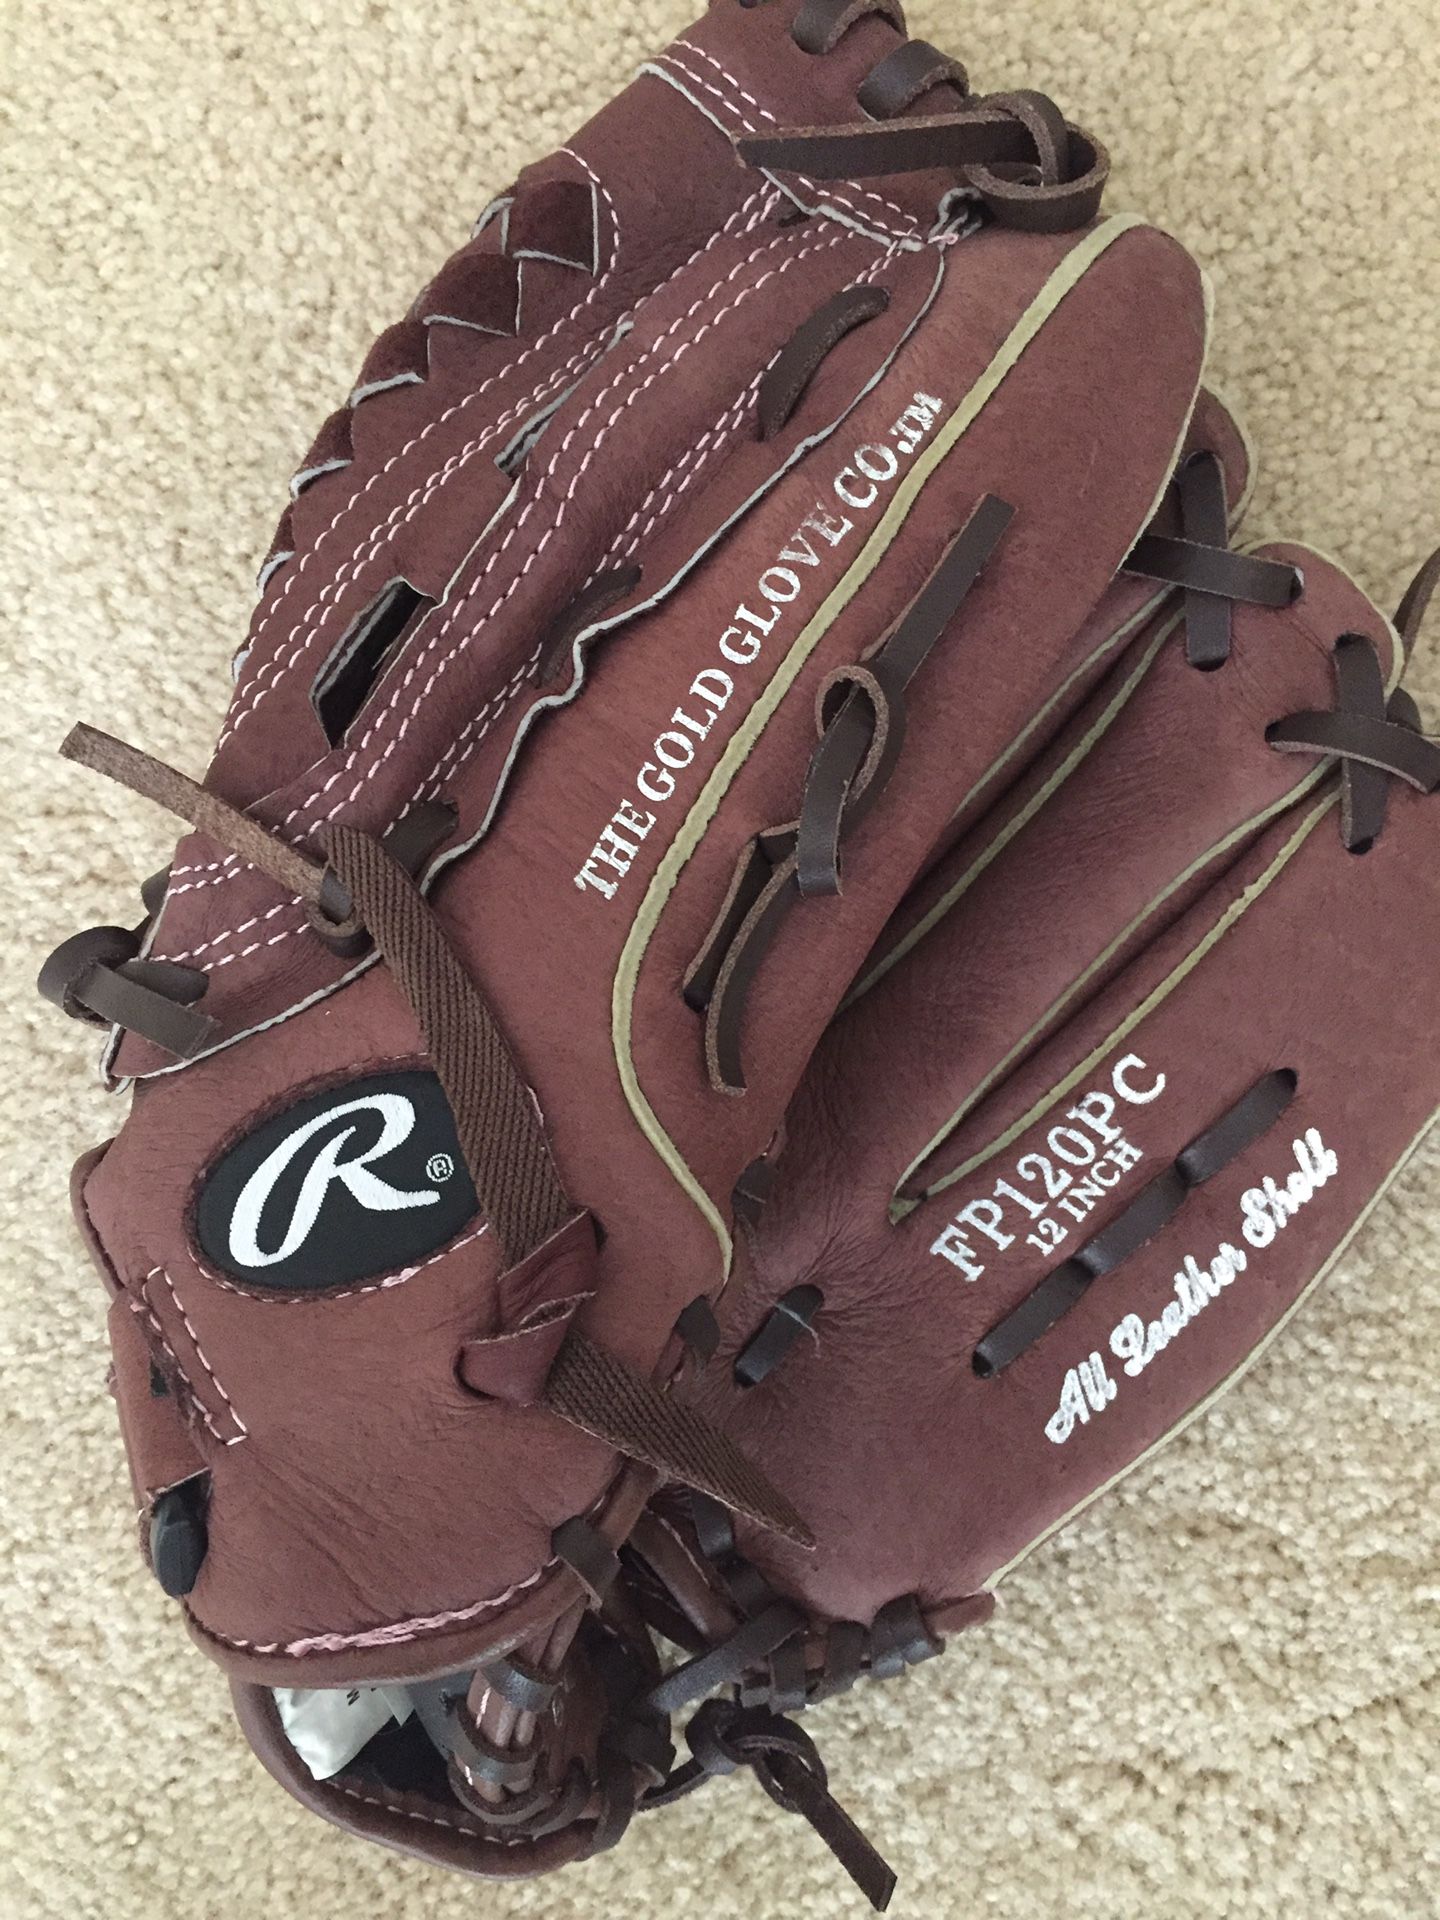 Rawlings 12” softball glove